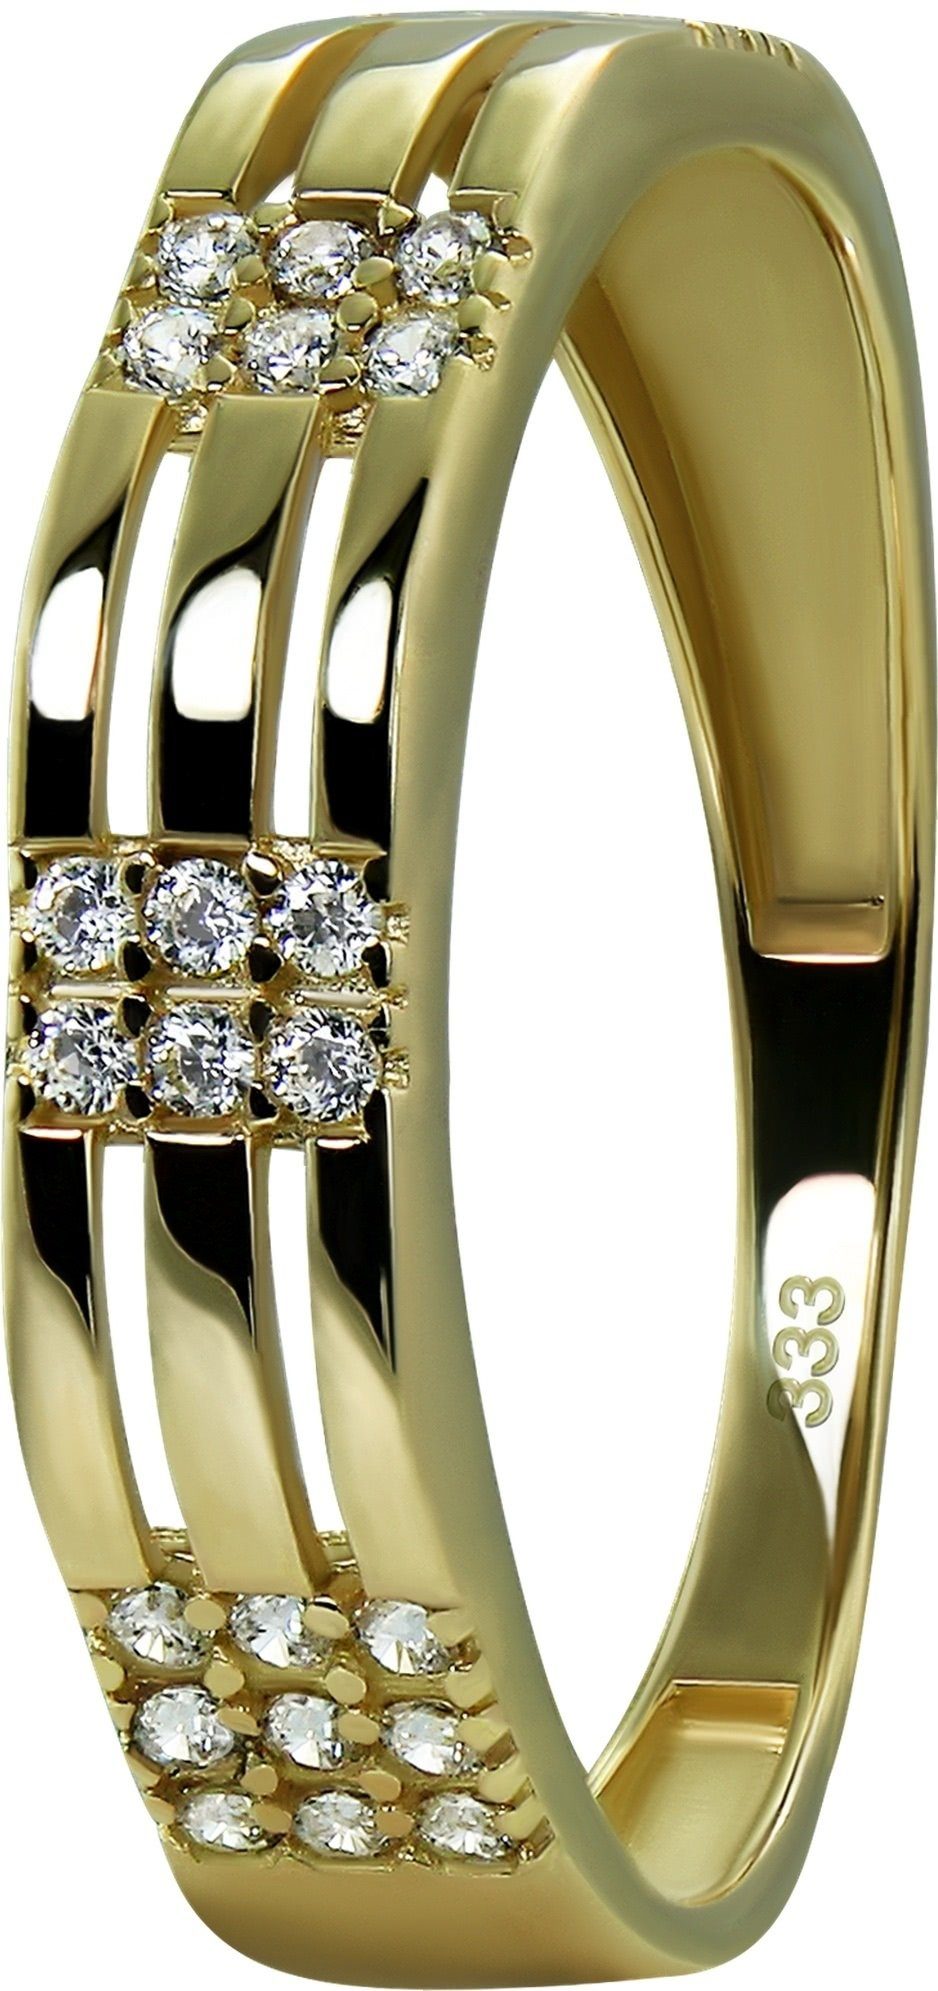 GoldDream Goldring GoldDream Gold Ring Sparkle Gr.58 (Fingerring), Damen Ring Sparkle 333 Gelbgold - 8 Karat, Farbe: gold, weiß